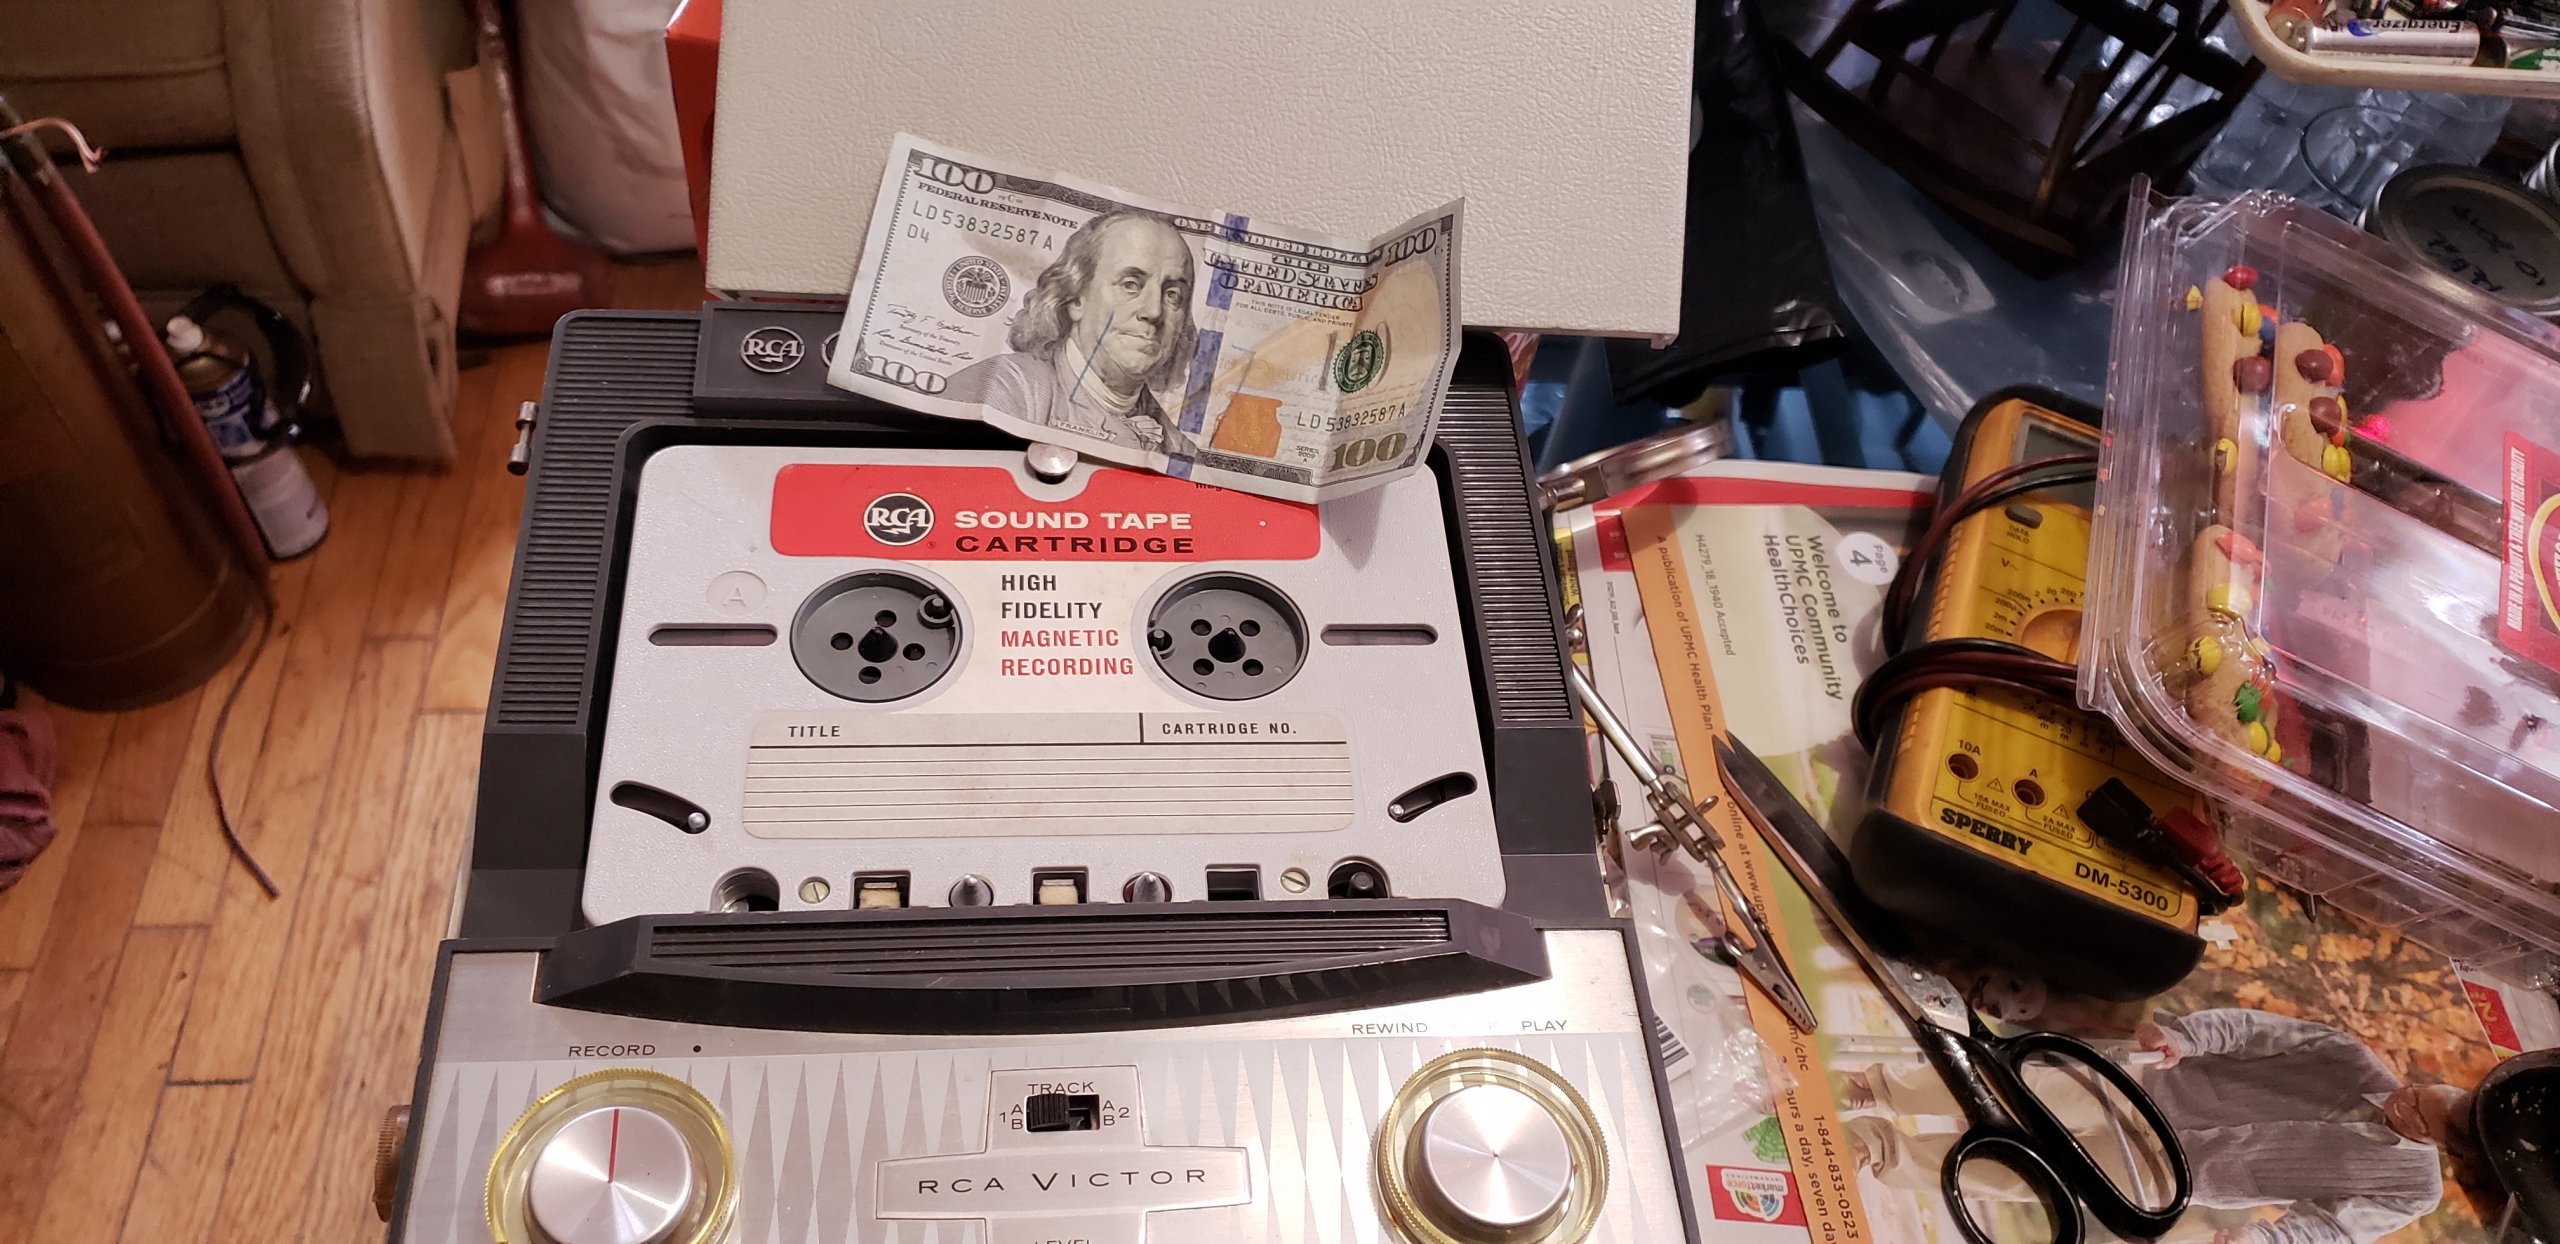 RCA cassette player